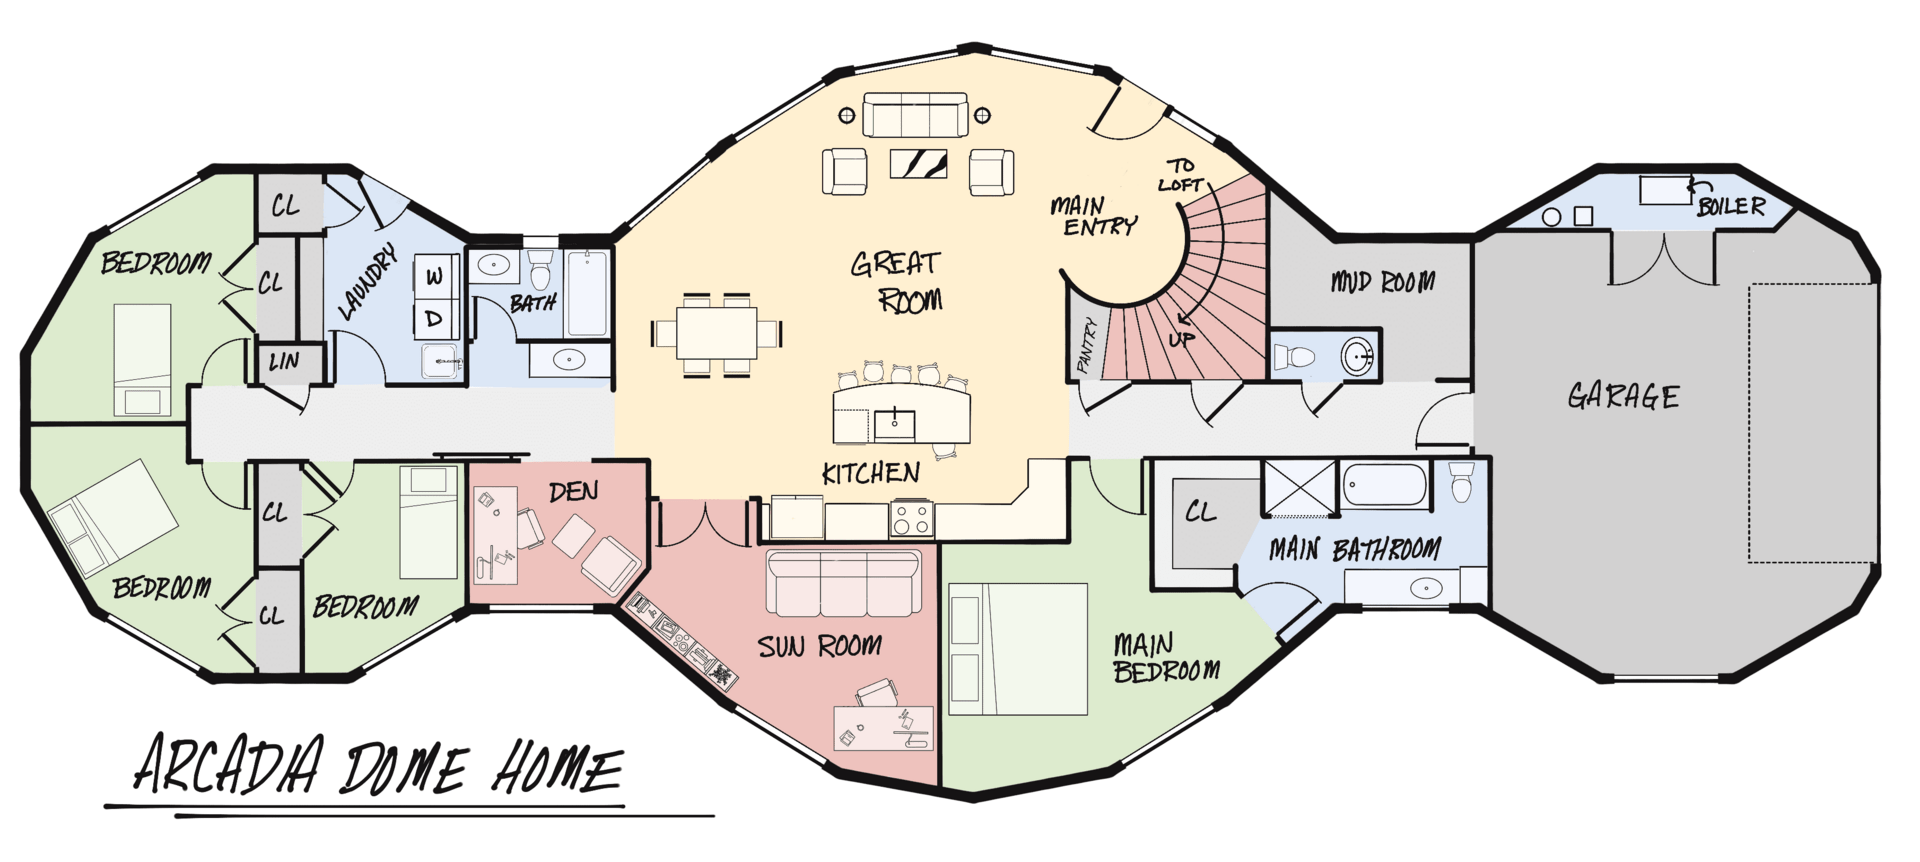 Floorplan for Arcadia Dome Home.